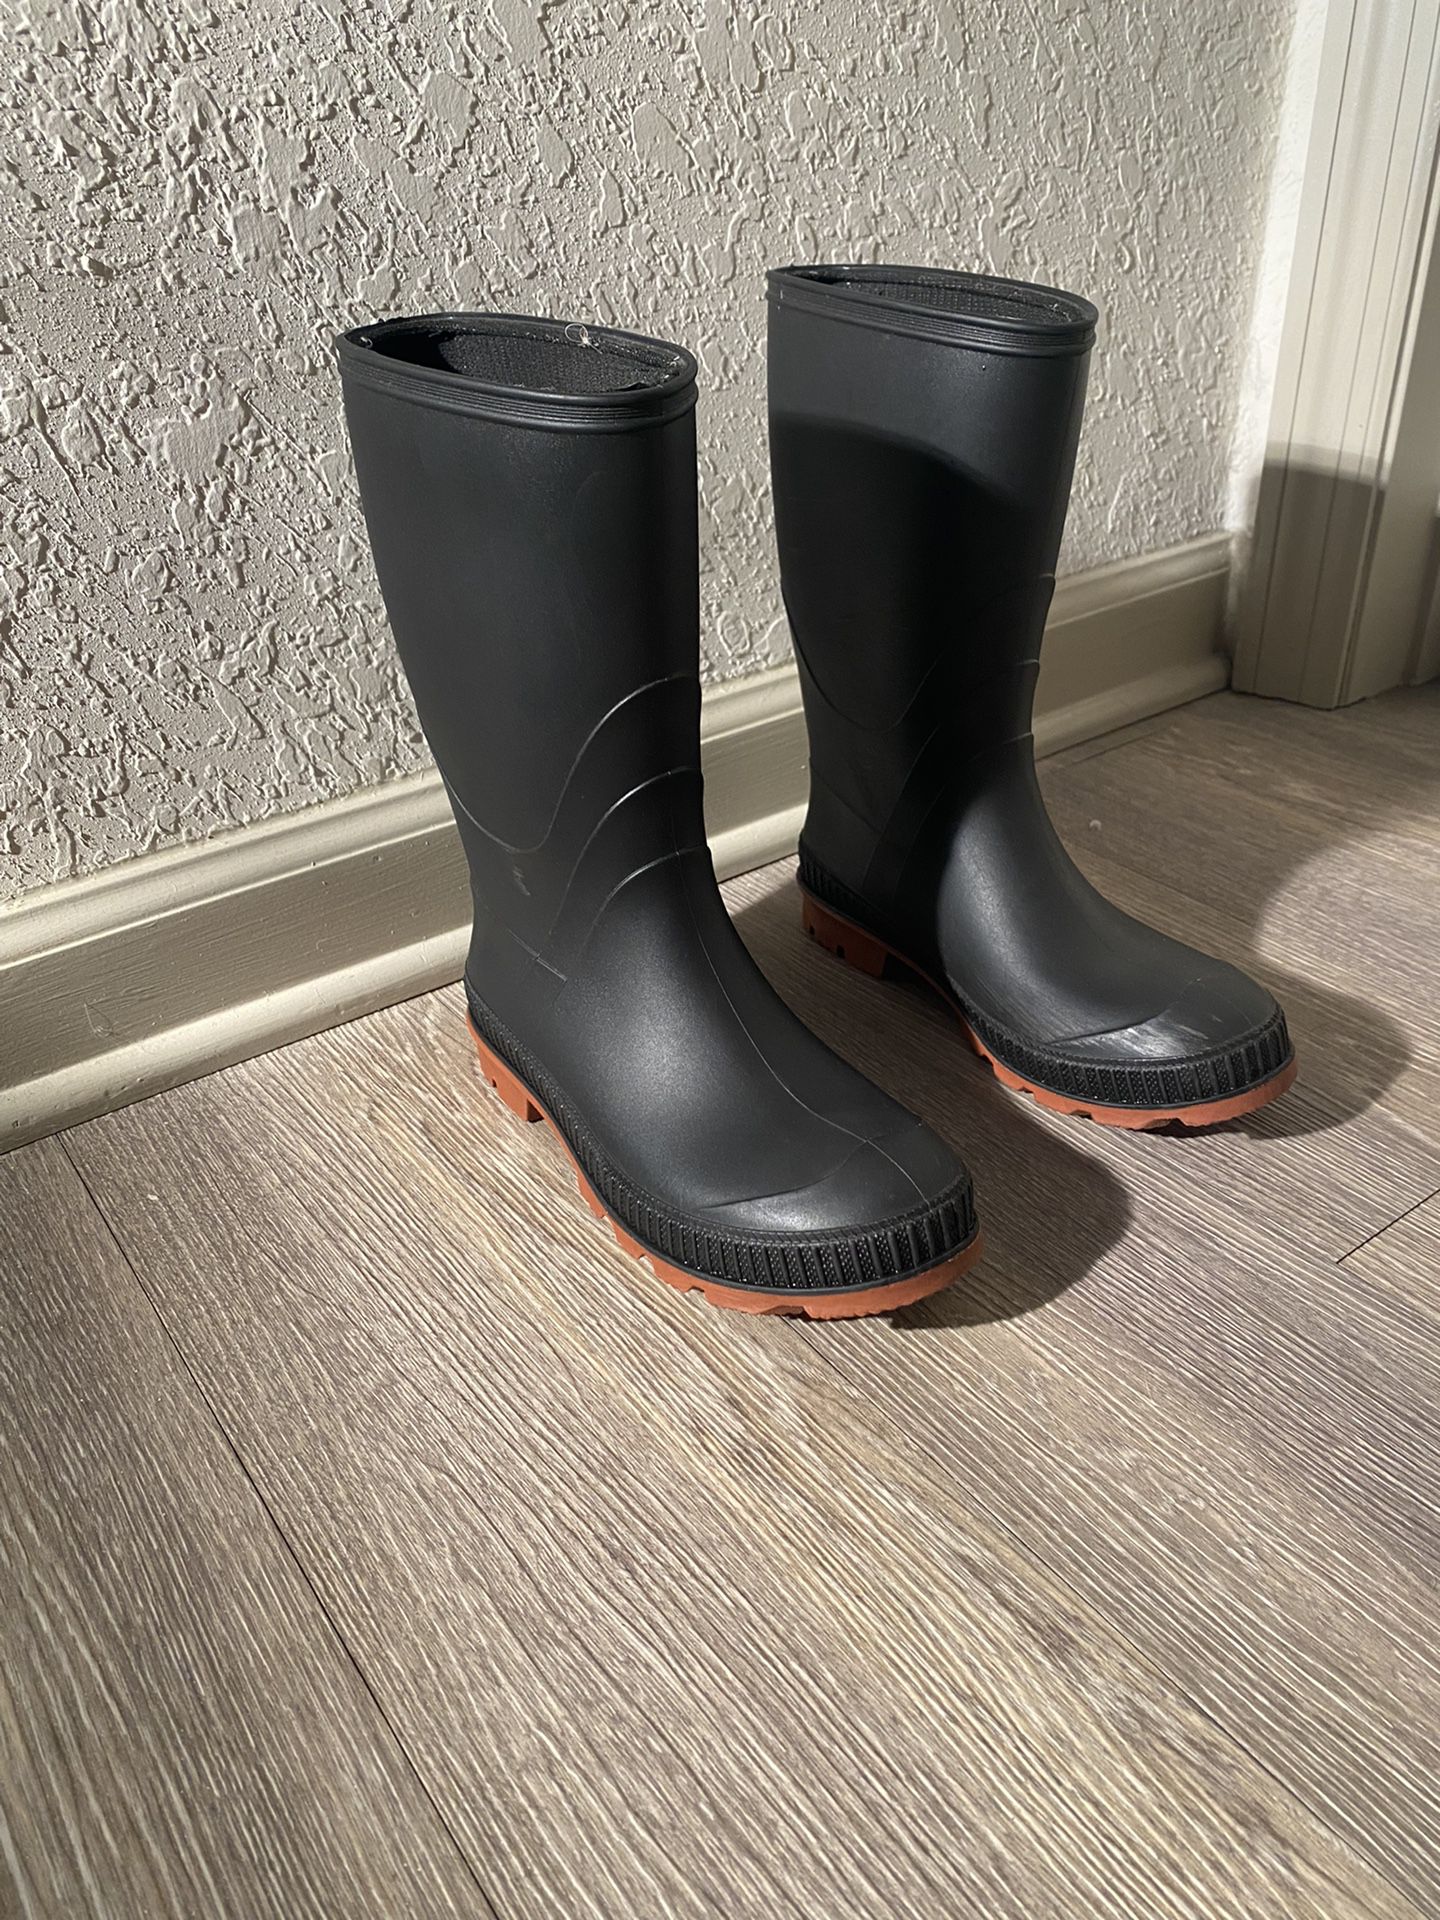 Sturdy  Rain boots, Size 4 